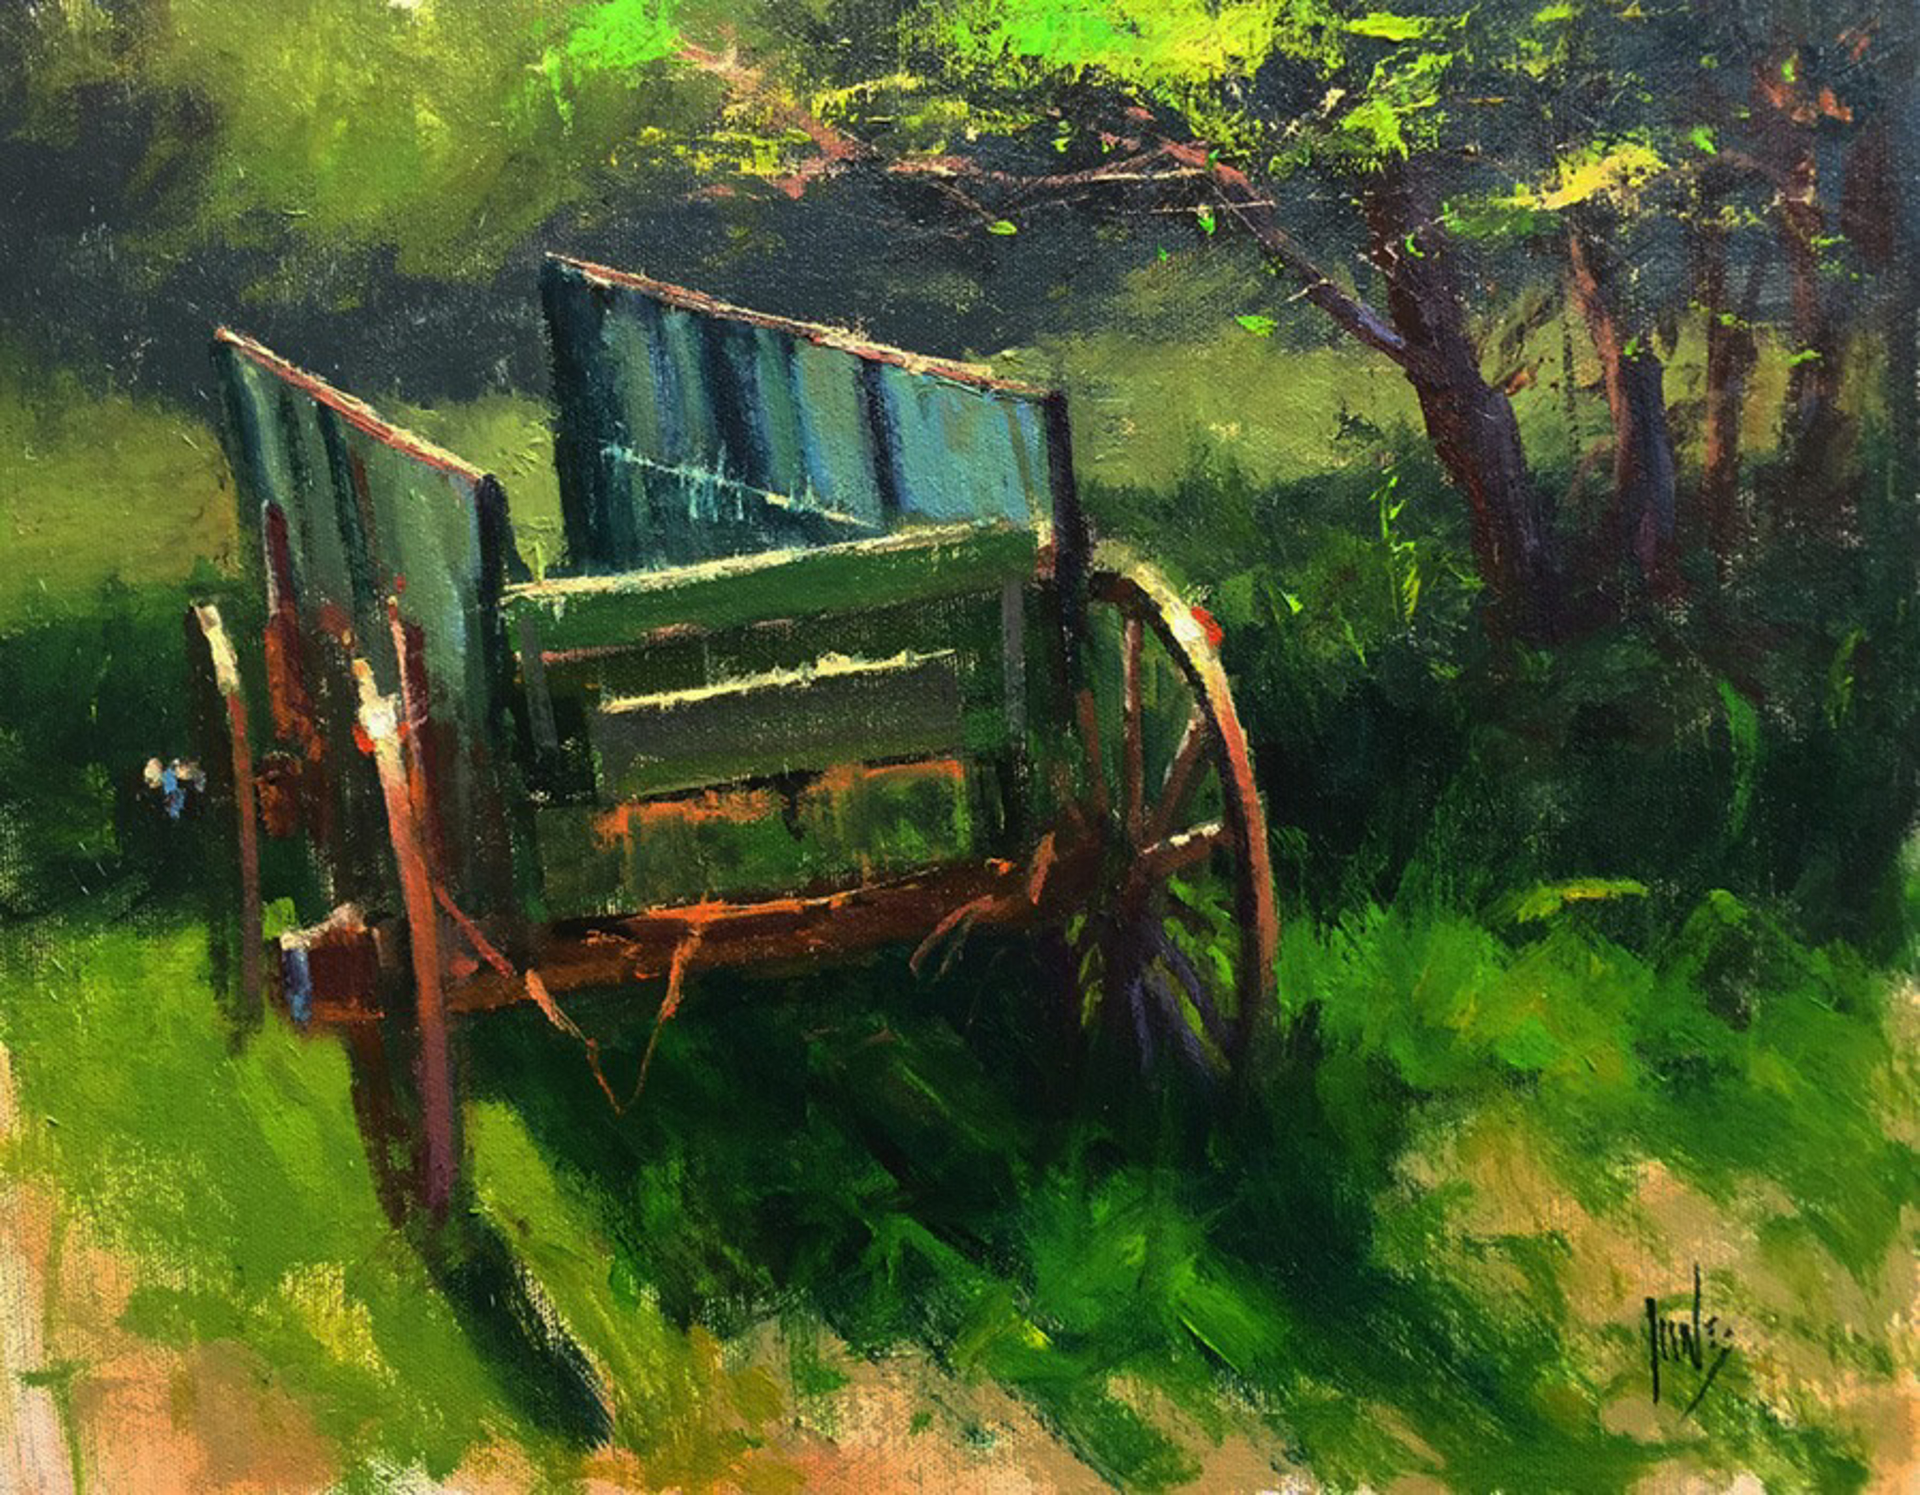 Wagon On The Green by Rusty Jones